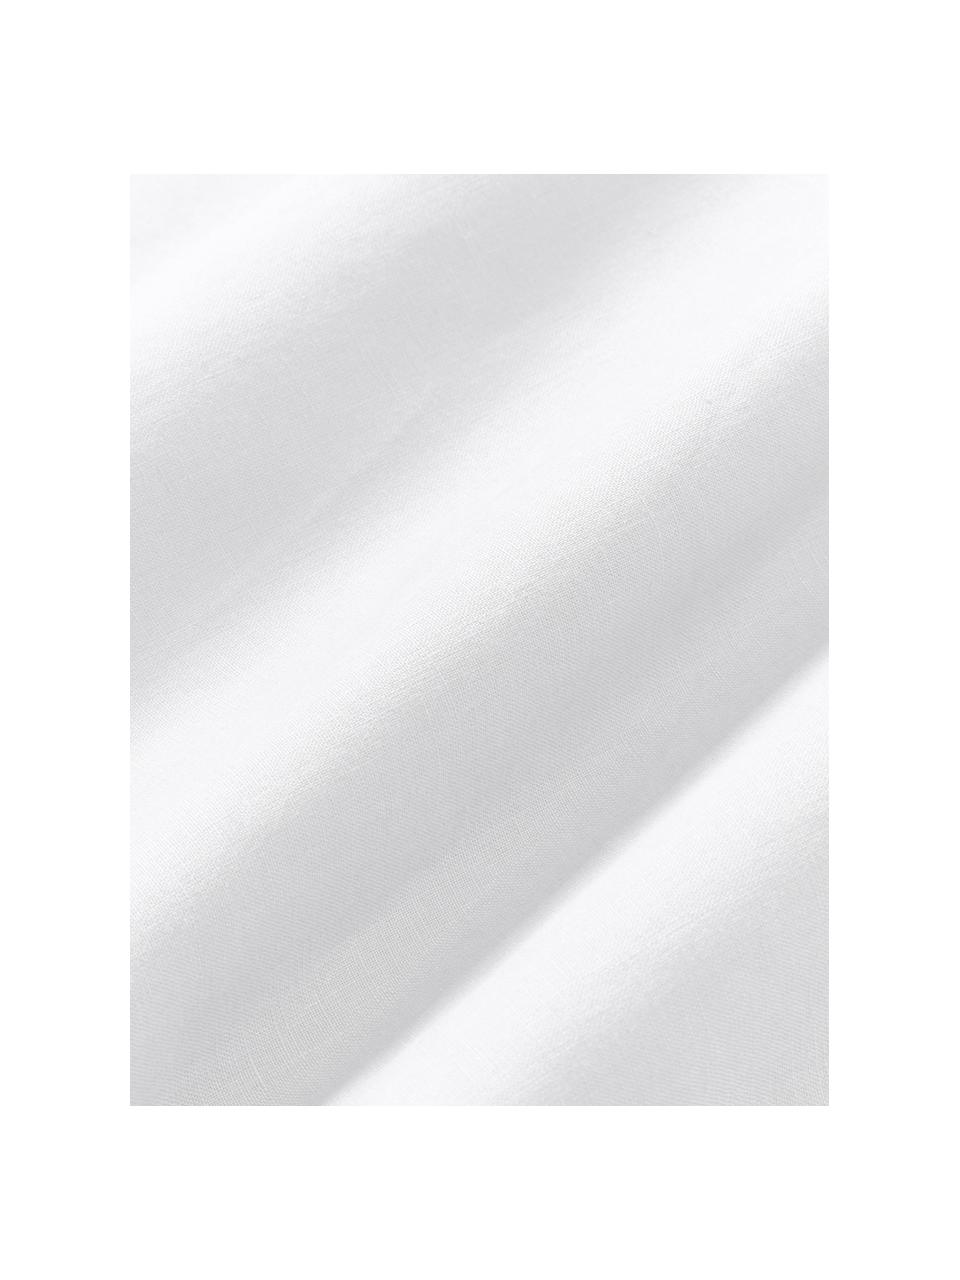 Drap plat en lin délavé Airy, Blanc, larg. 240 x long. 280 cm